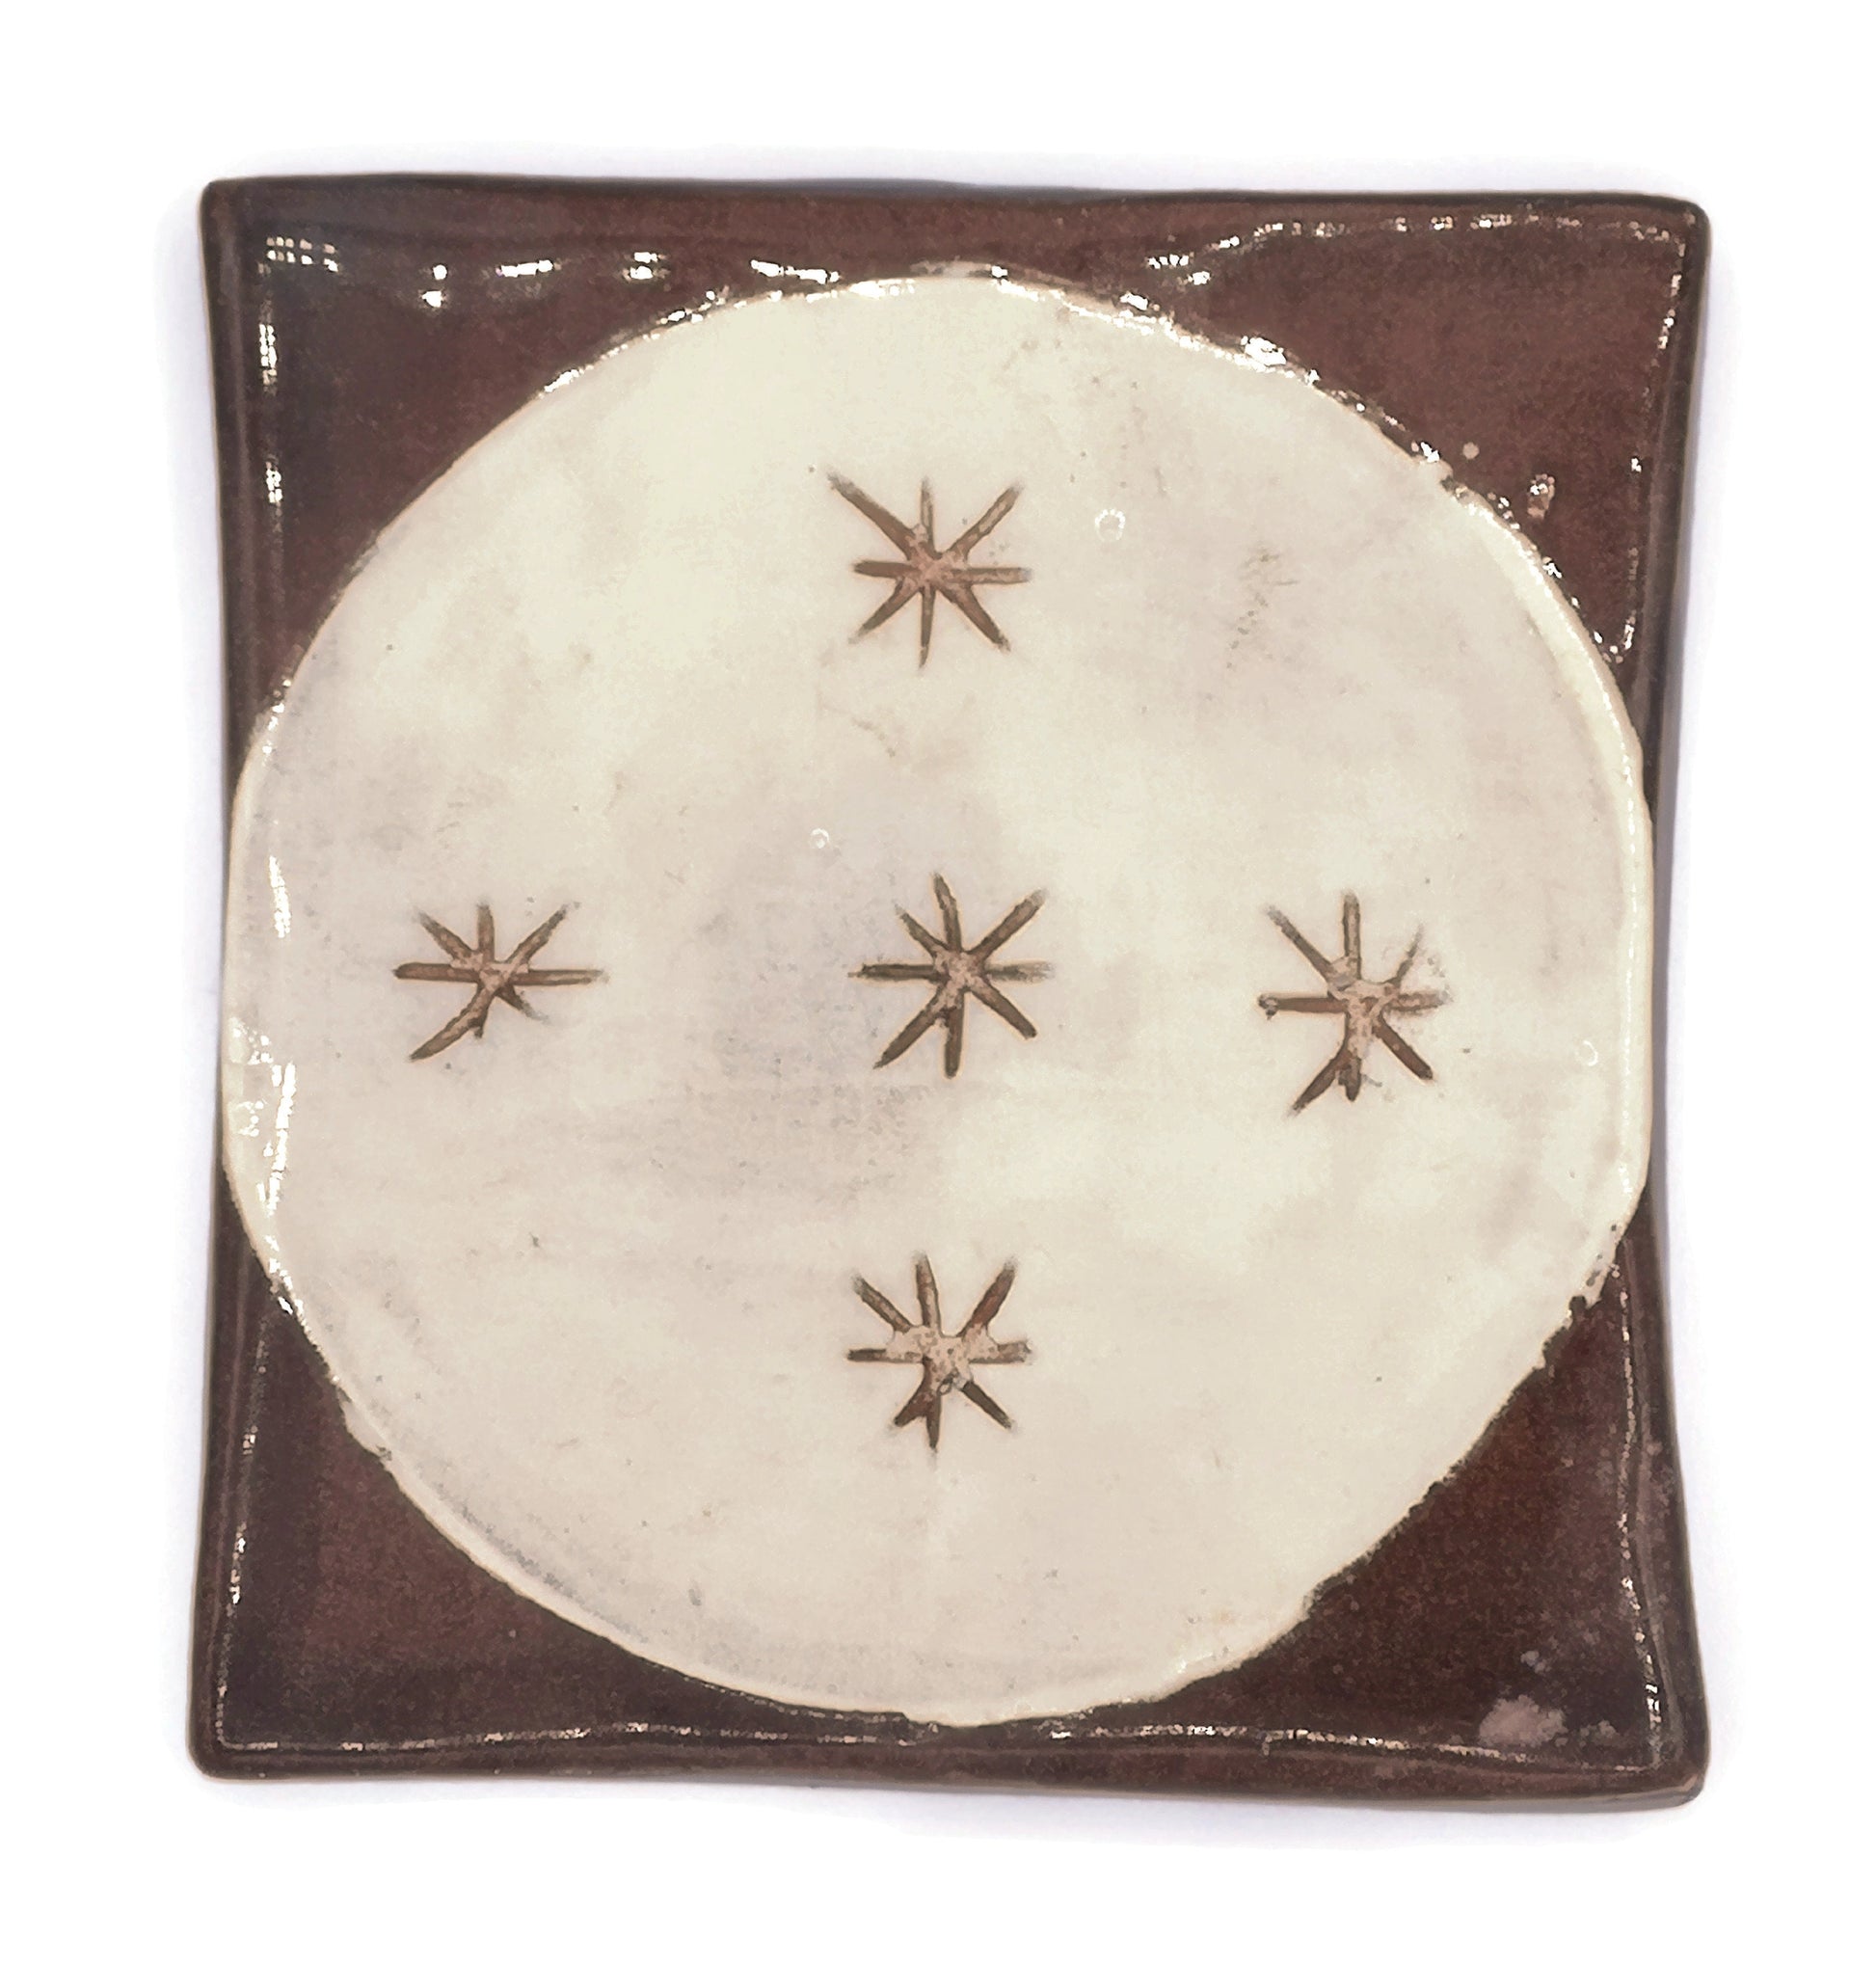 HAND PAINTED TILES, Portuguese Ceramic Art Tile, Small Art Deco Backsplash Tile With Moon Pattern, Housewarming Gift First Home - Ceramica Ana Rafael